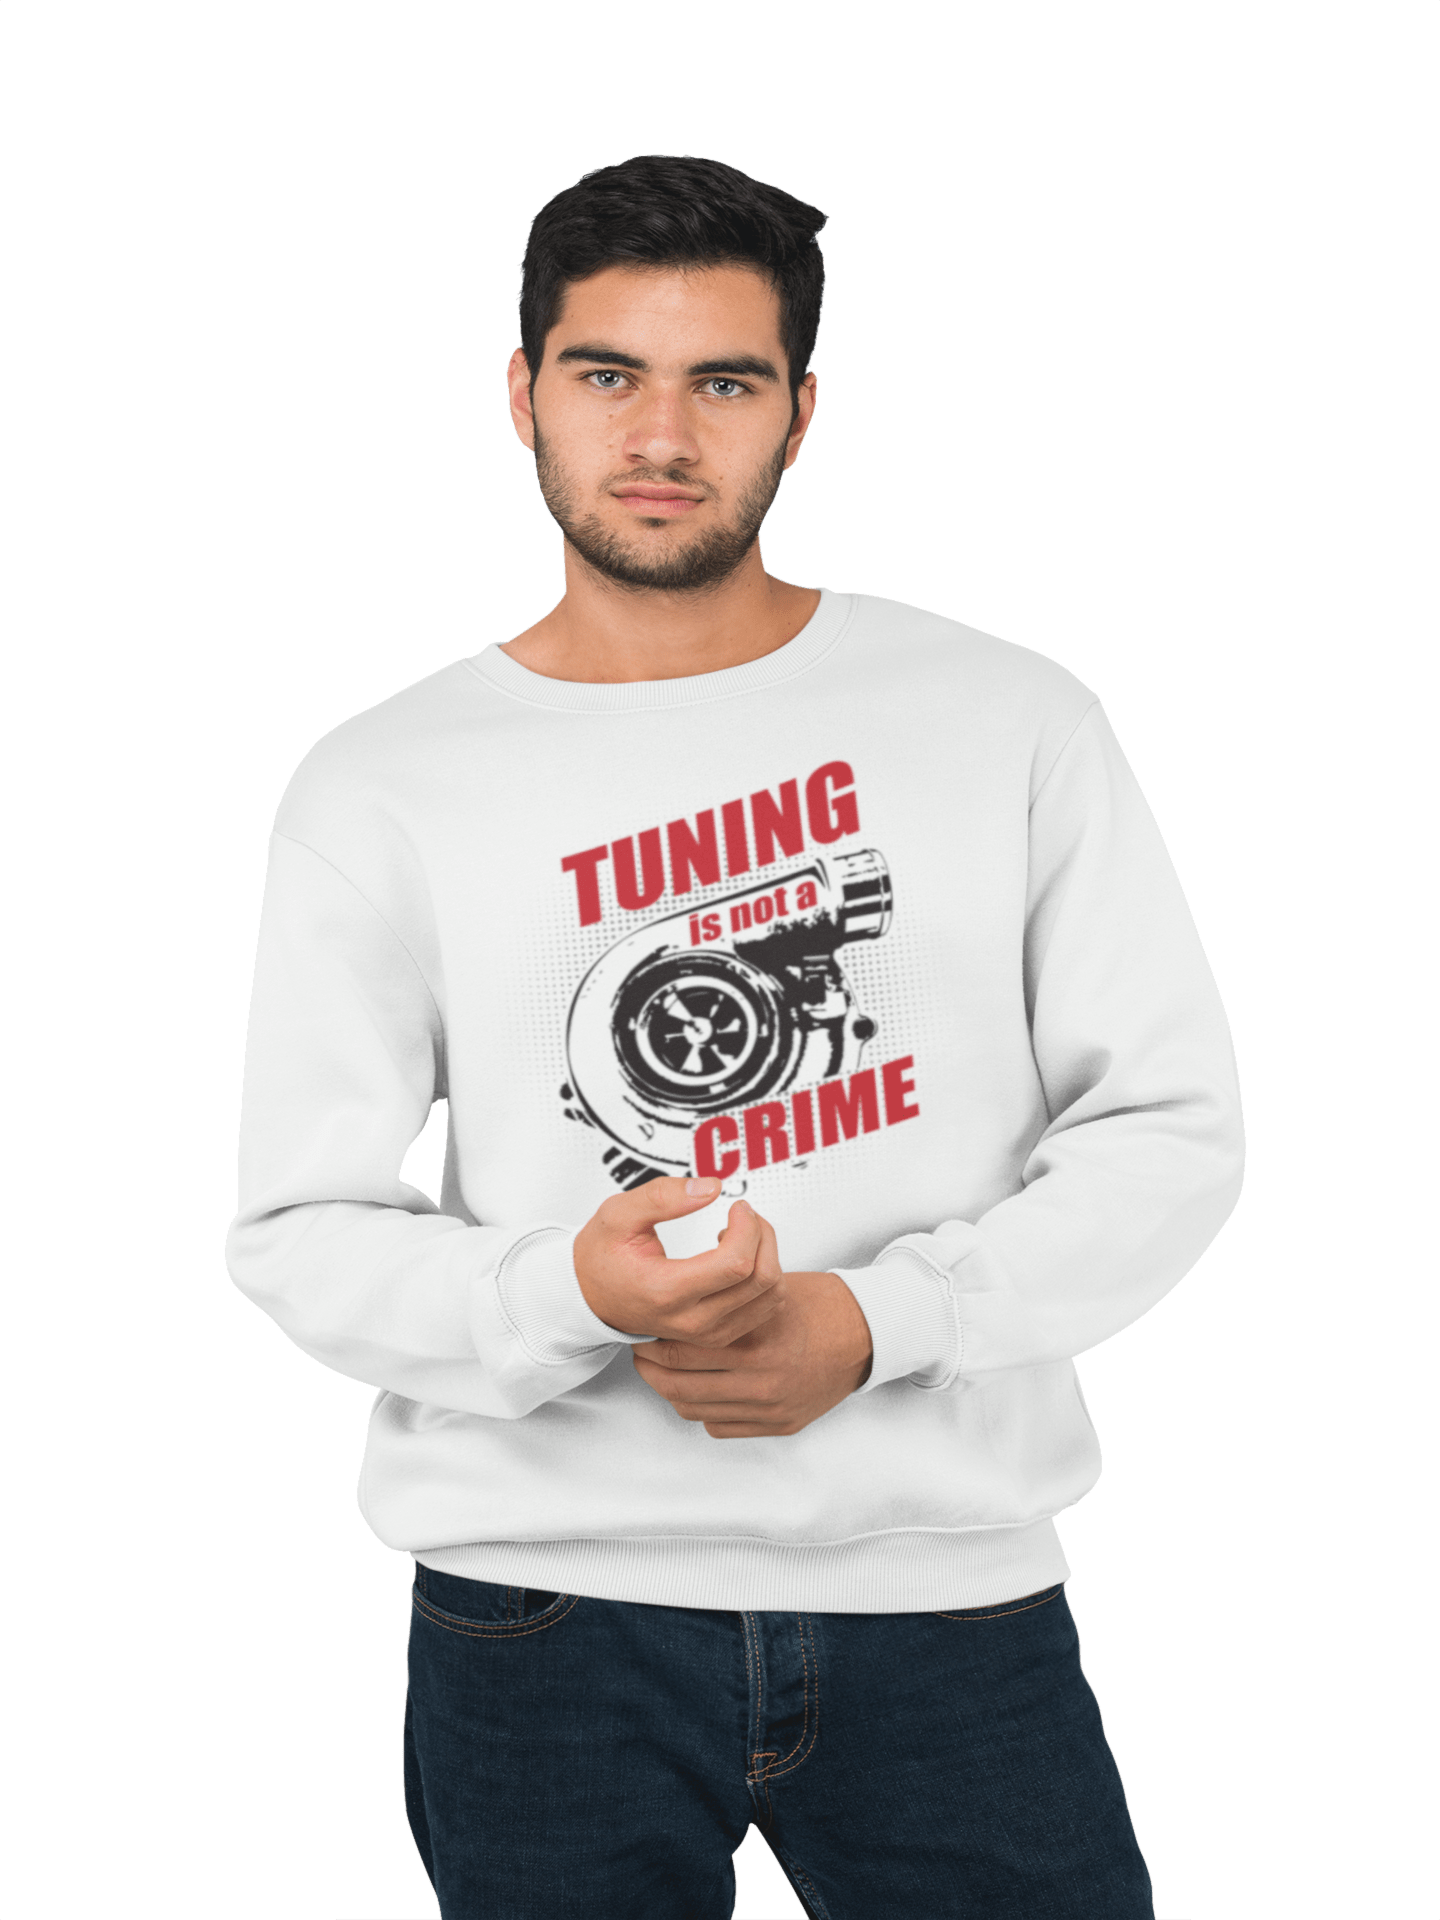 Tuning is not a Crime - Unisex Sweatshirt von TurboArts